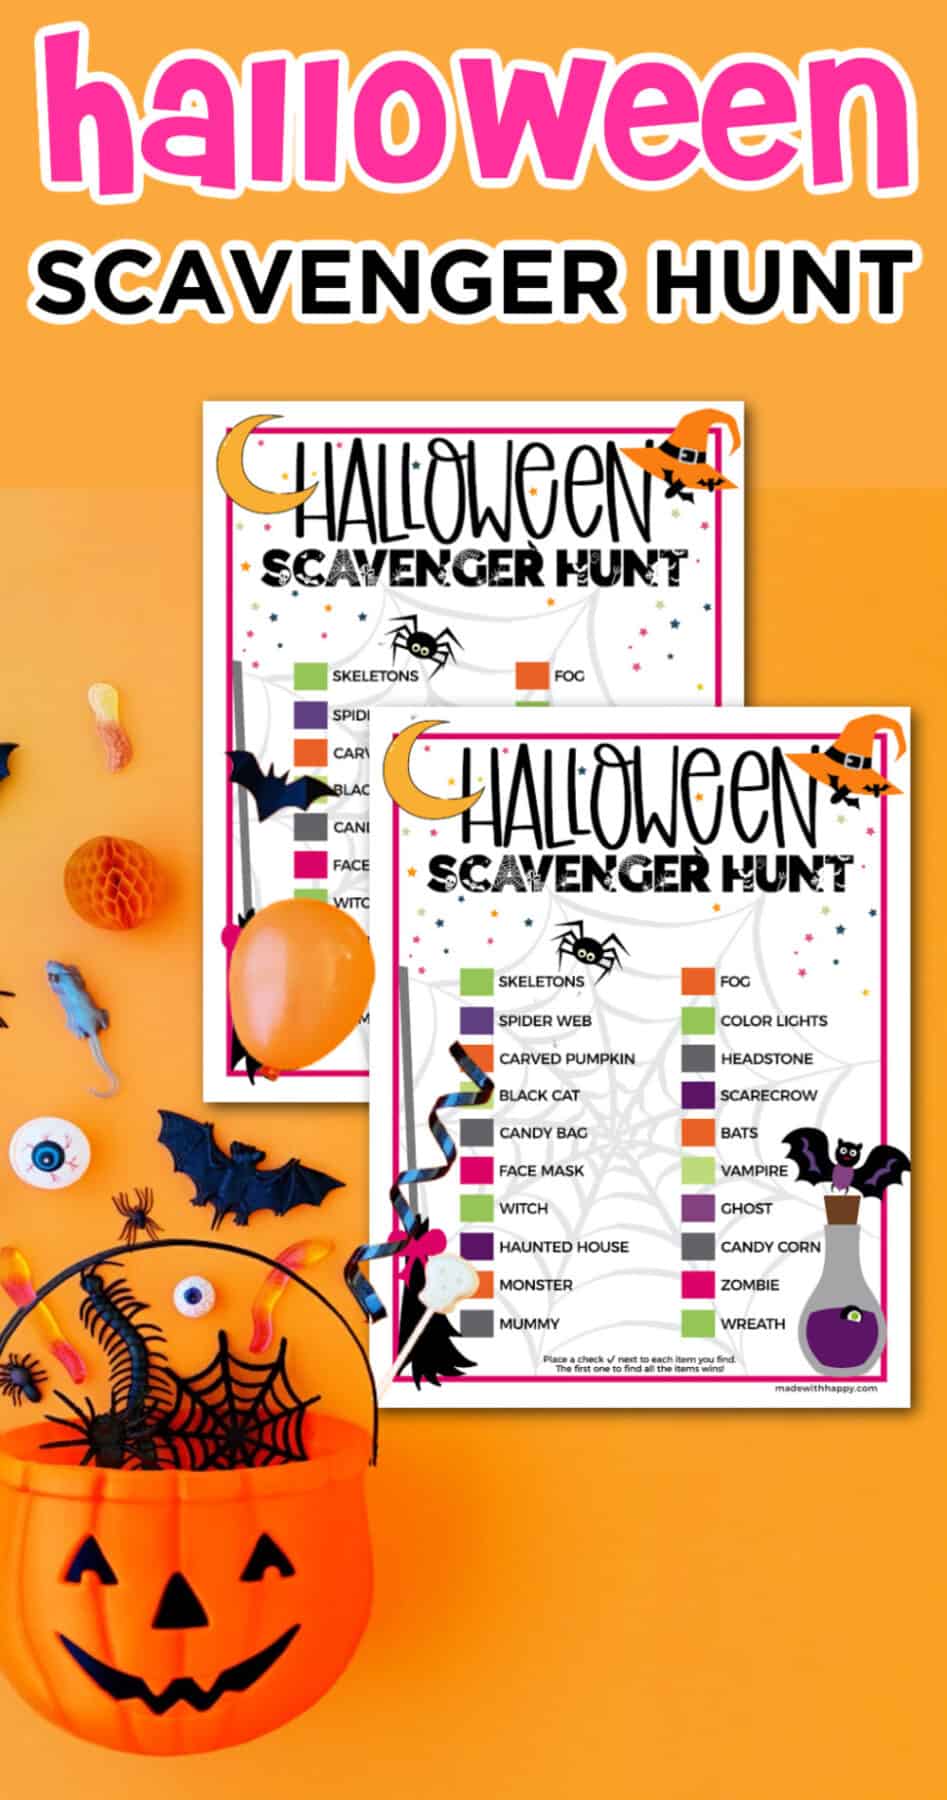 scavenger hunt halloween ideas